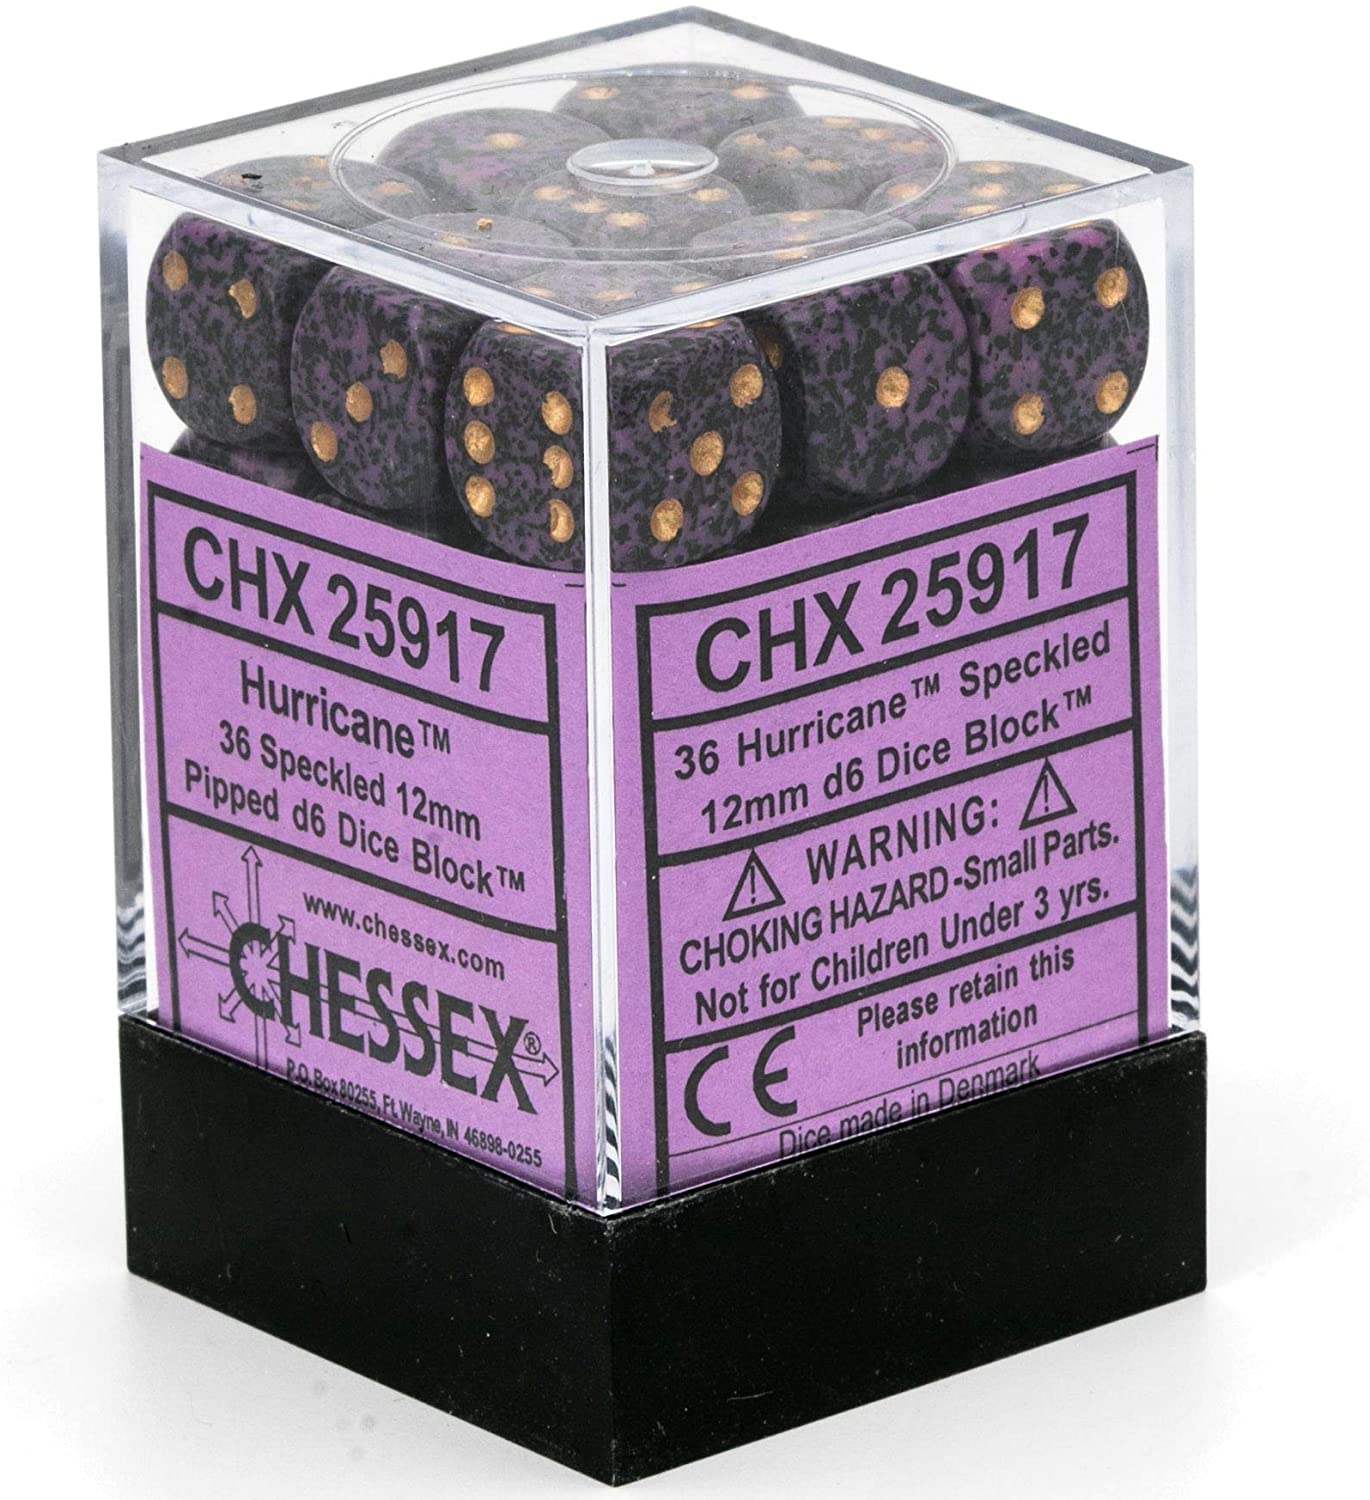 Chessex Dice: D6 Block 12mm - Speckled - Hurricane (CHX 25917) - Gamescape